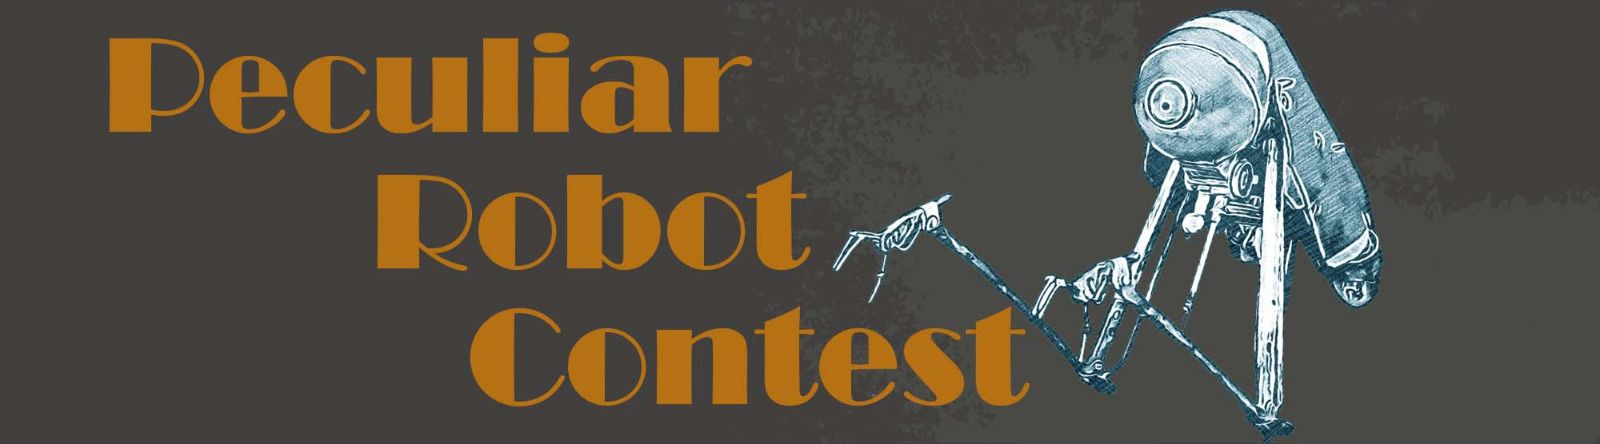 Peculair Robot Contest